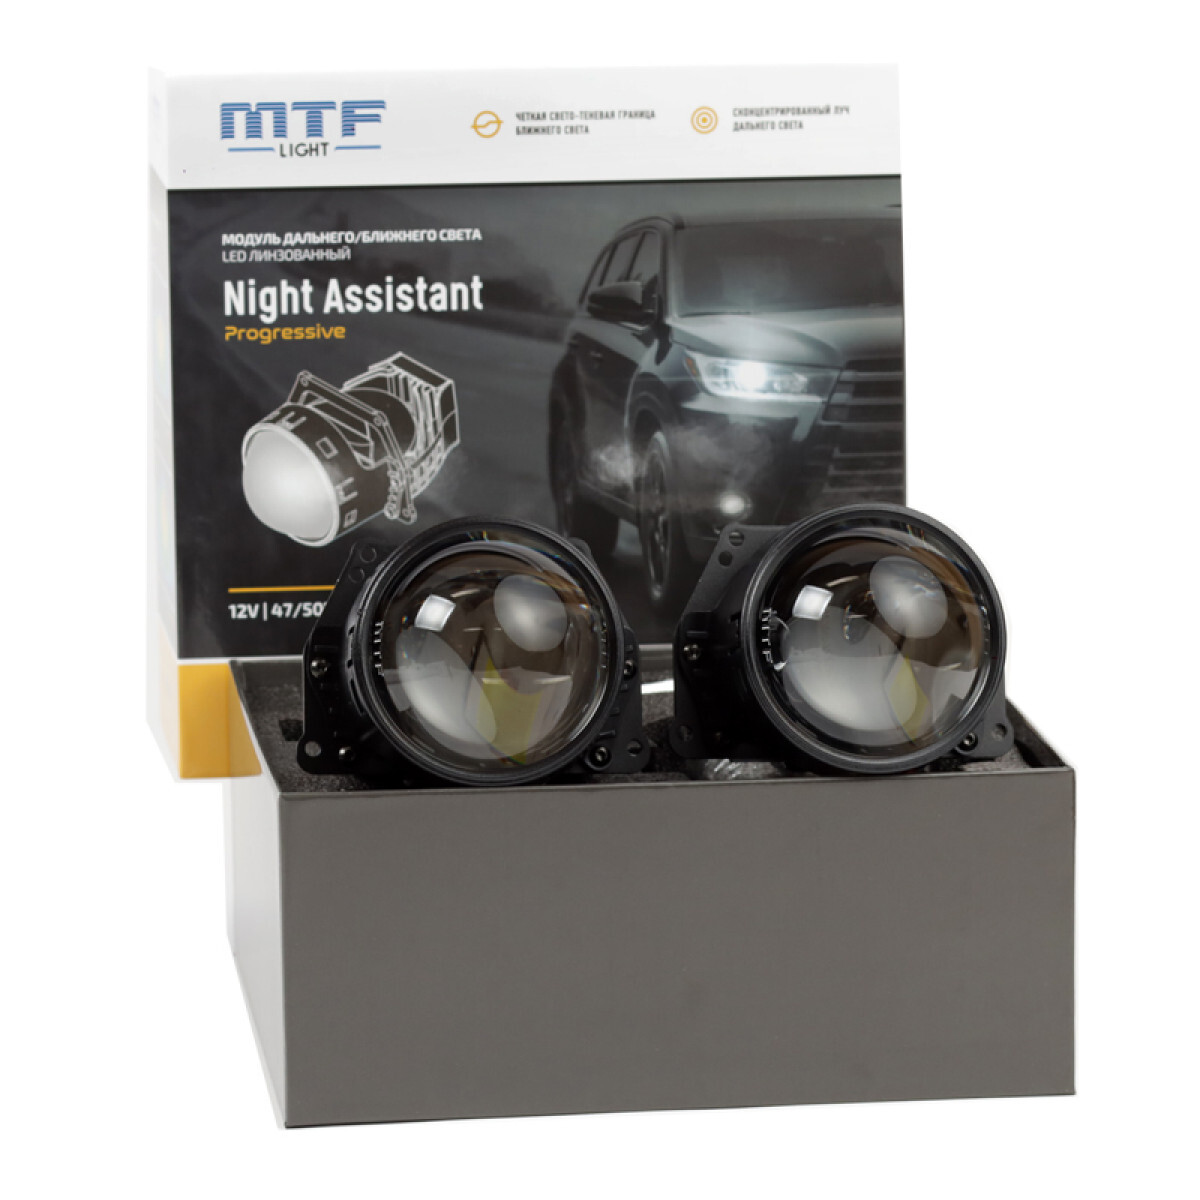 Bi led линзы mtf. Светодиодные линзы MTF-Light Night Assistant Progressive 5500k. Би лед модули МТФ. Светодиодные би-линзы Night Assistant led Progressive. Bi led Assistant MTF Night 3.0.